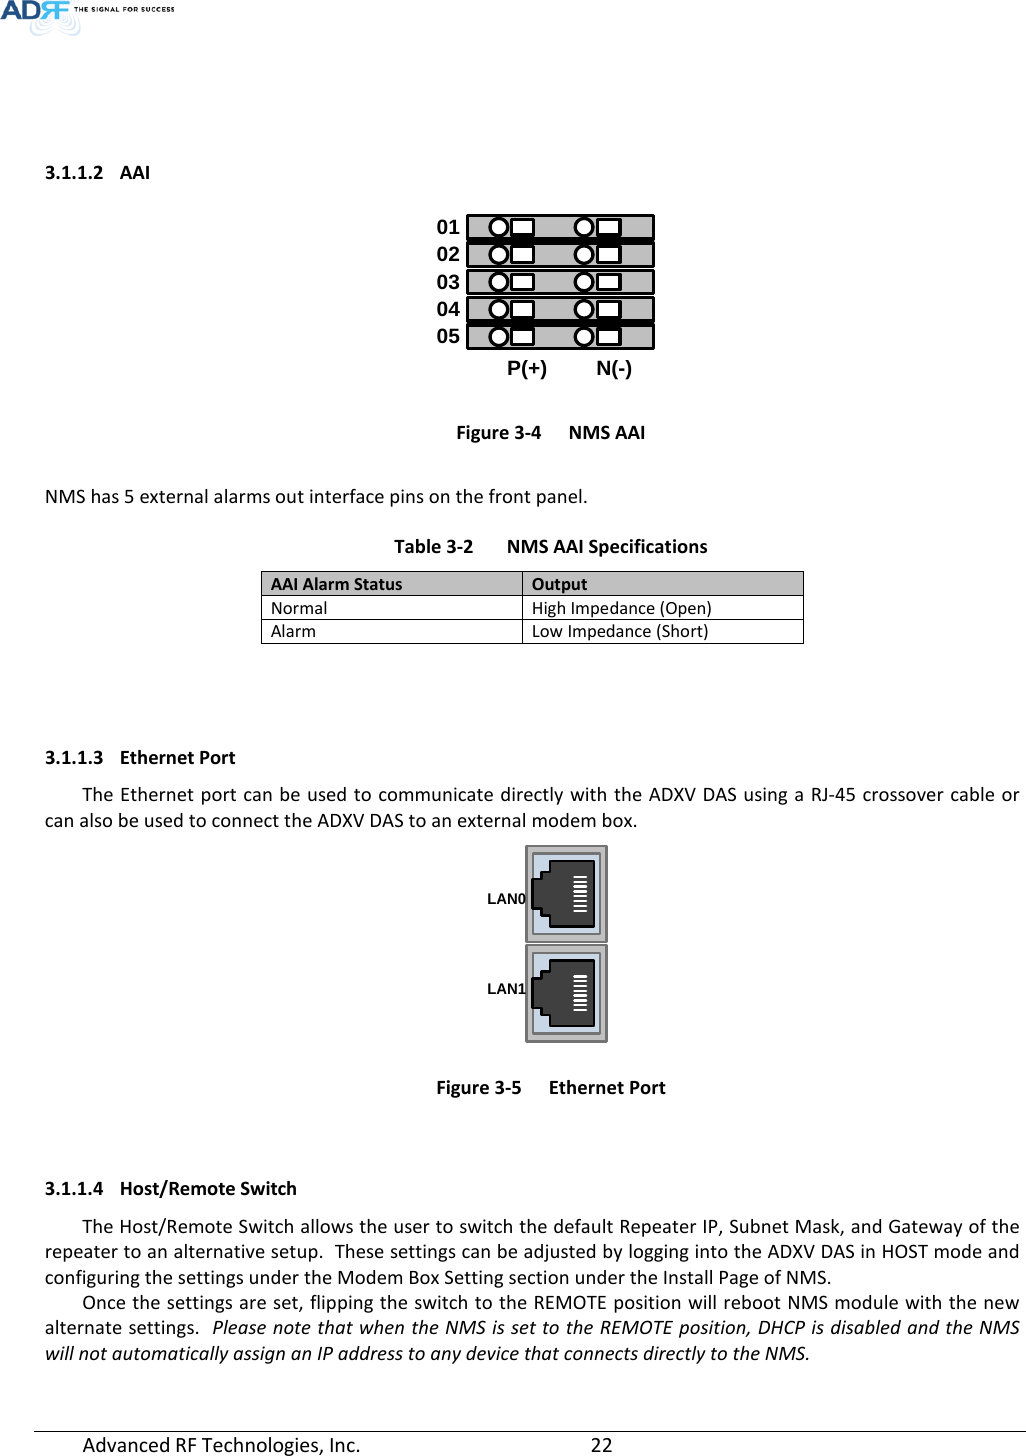 Page 22 of ADRF KOREA ADXV DAS(Distributed Antenna System) User Manual ADXV DAS